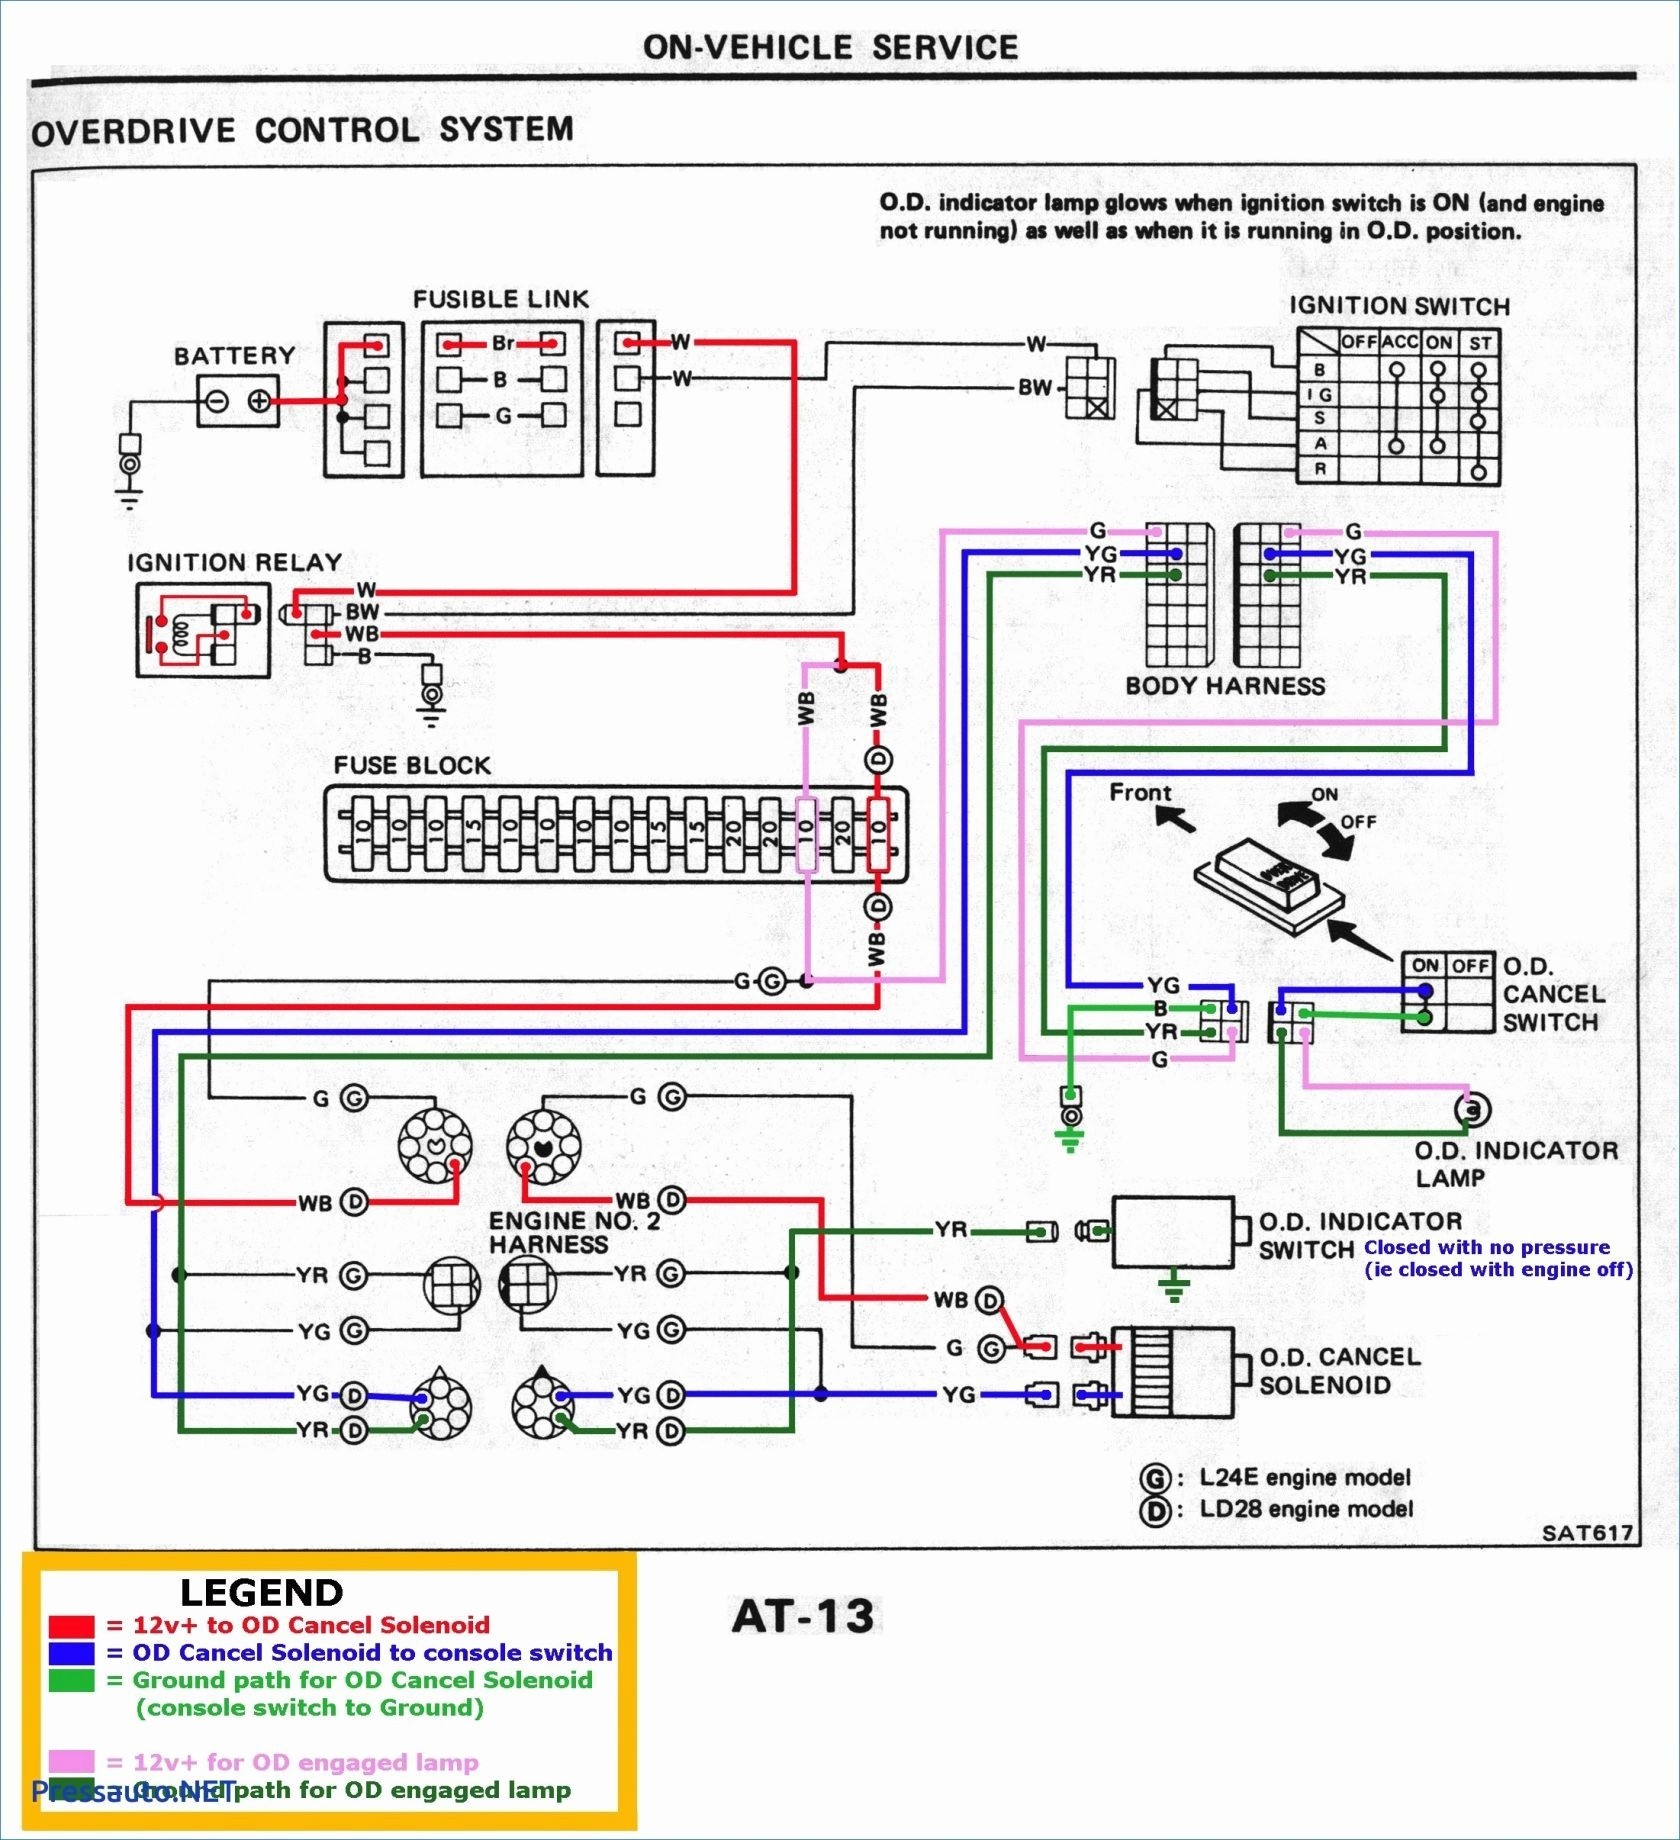 Wiring Diagram For Warn Winch Fresh Wiring Diagram Warn A2000 Wiring Diagram New J&m Catalog 2014 Part